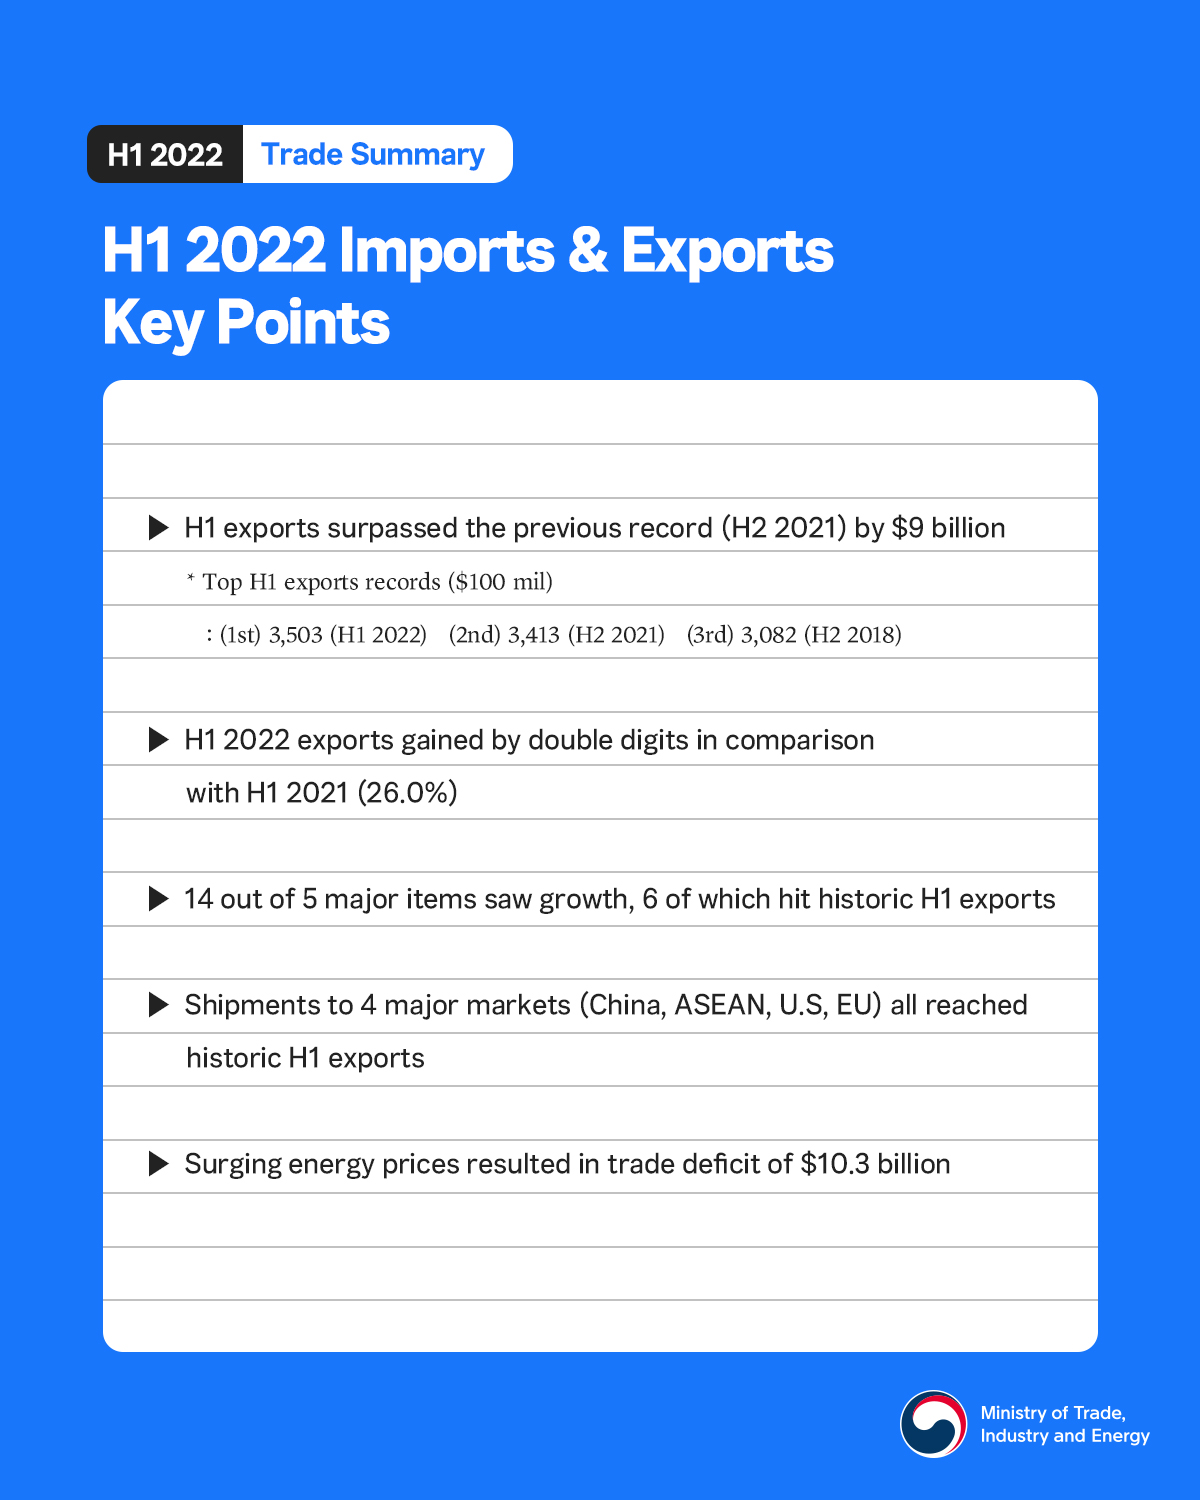 Korea's H1 2022 exports achieve historic highs! Image 1